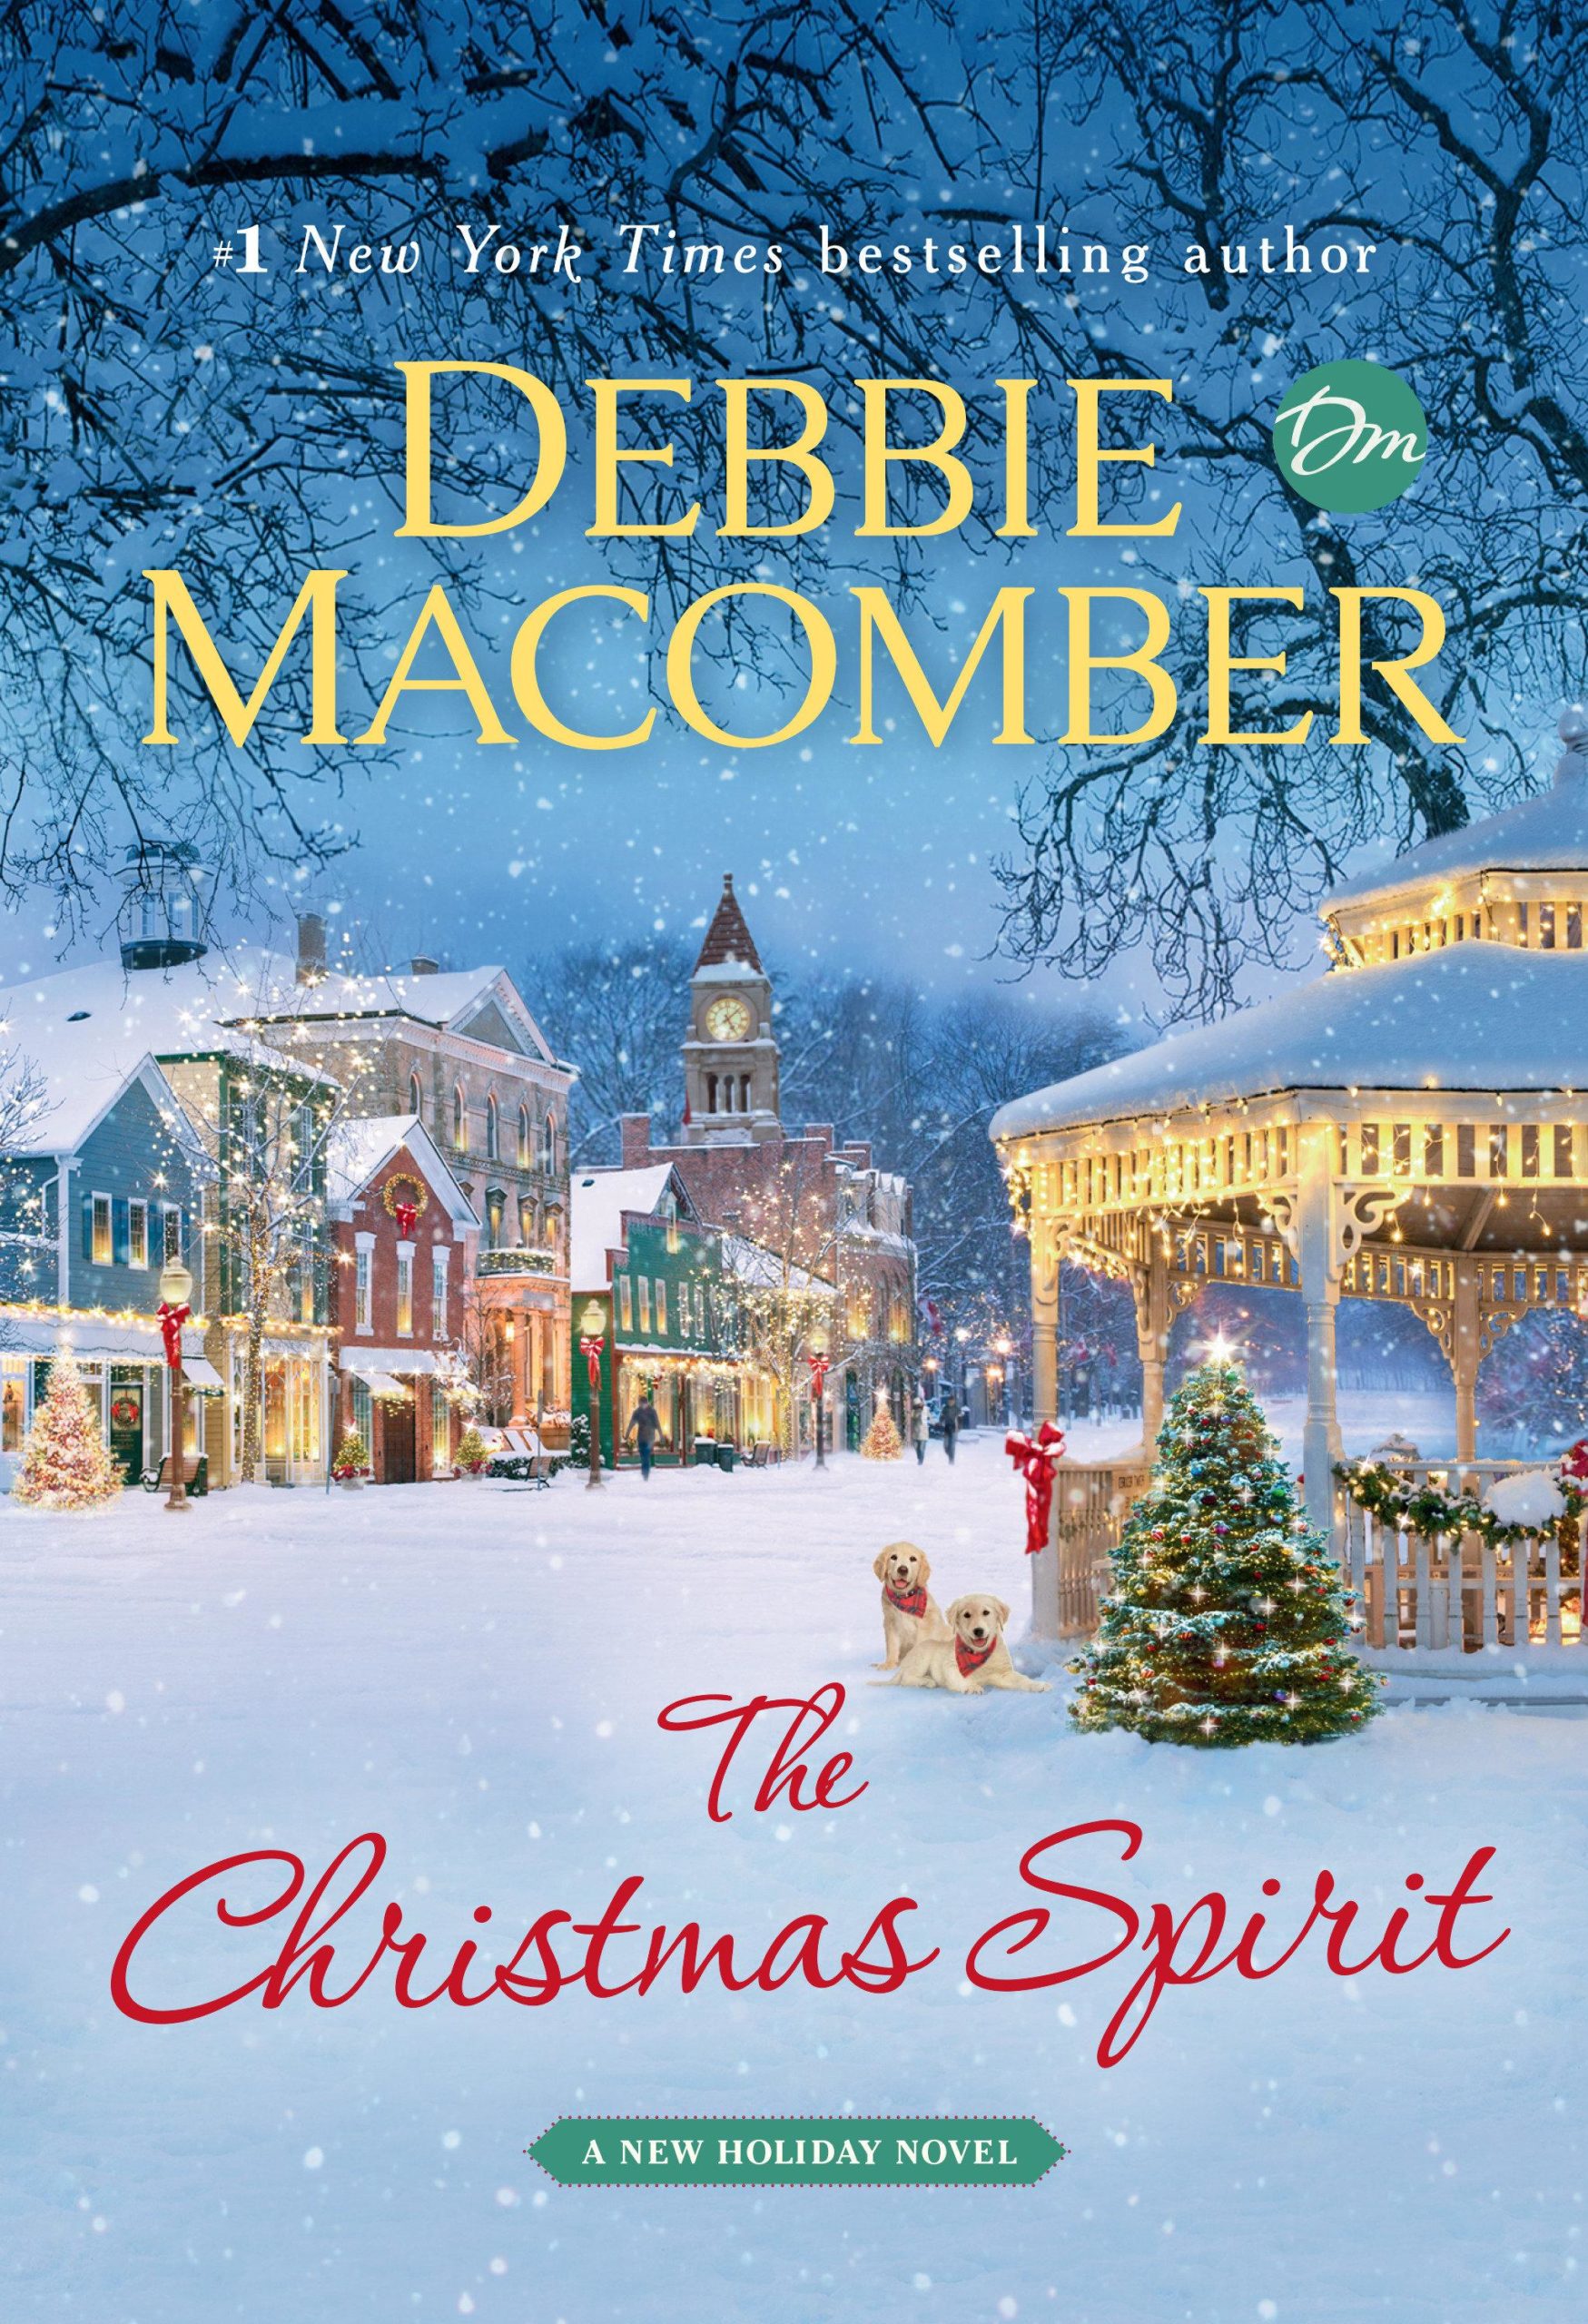 Debbie Macomber's Christmas Spirit